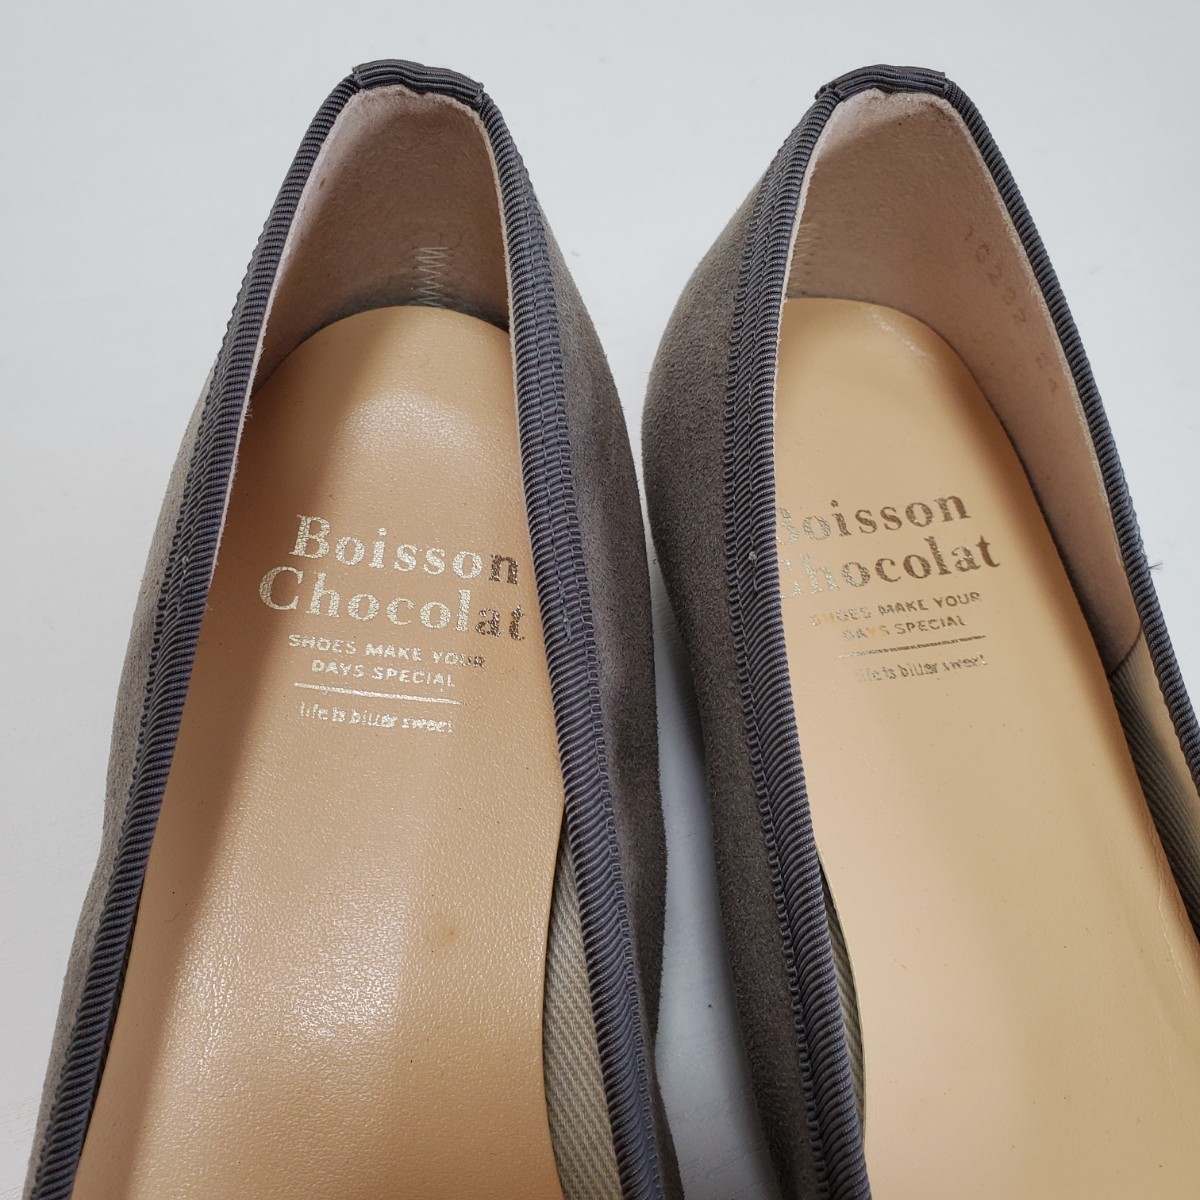  as good as new *Boisson Chocolatbowason chocolate suede leather po Inte dotu Flat pumps ballet shoes (24cm) gray 